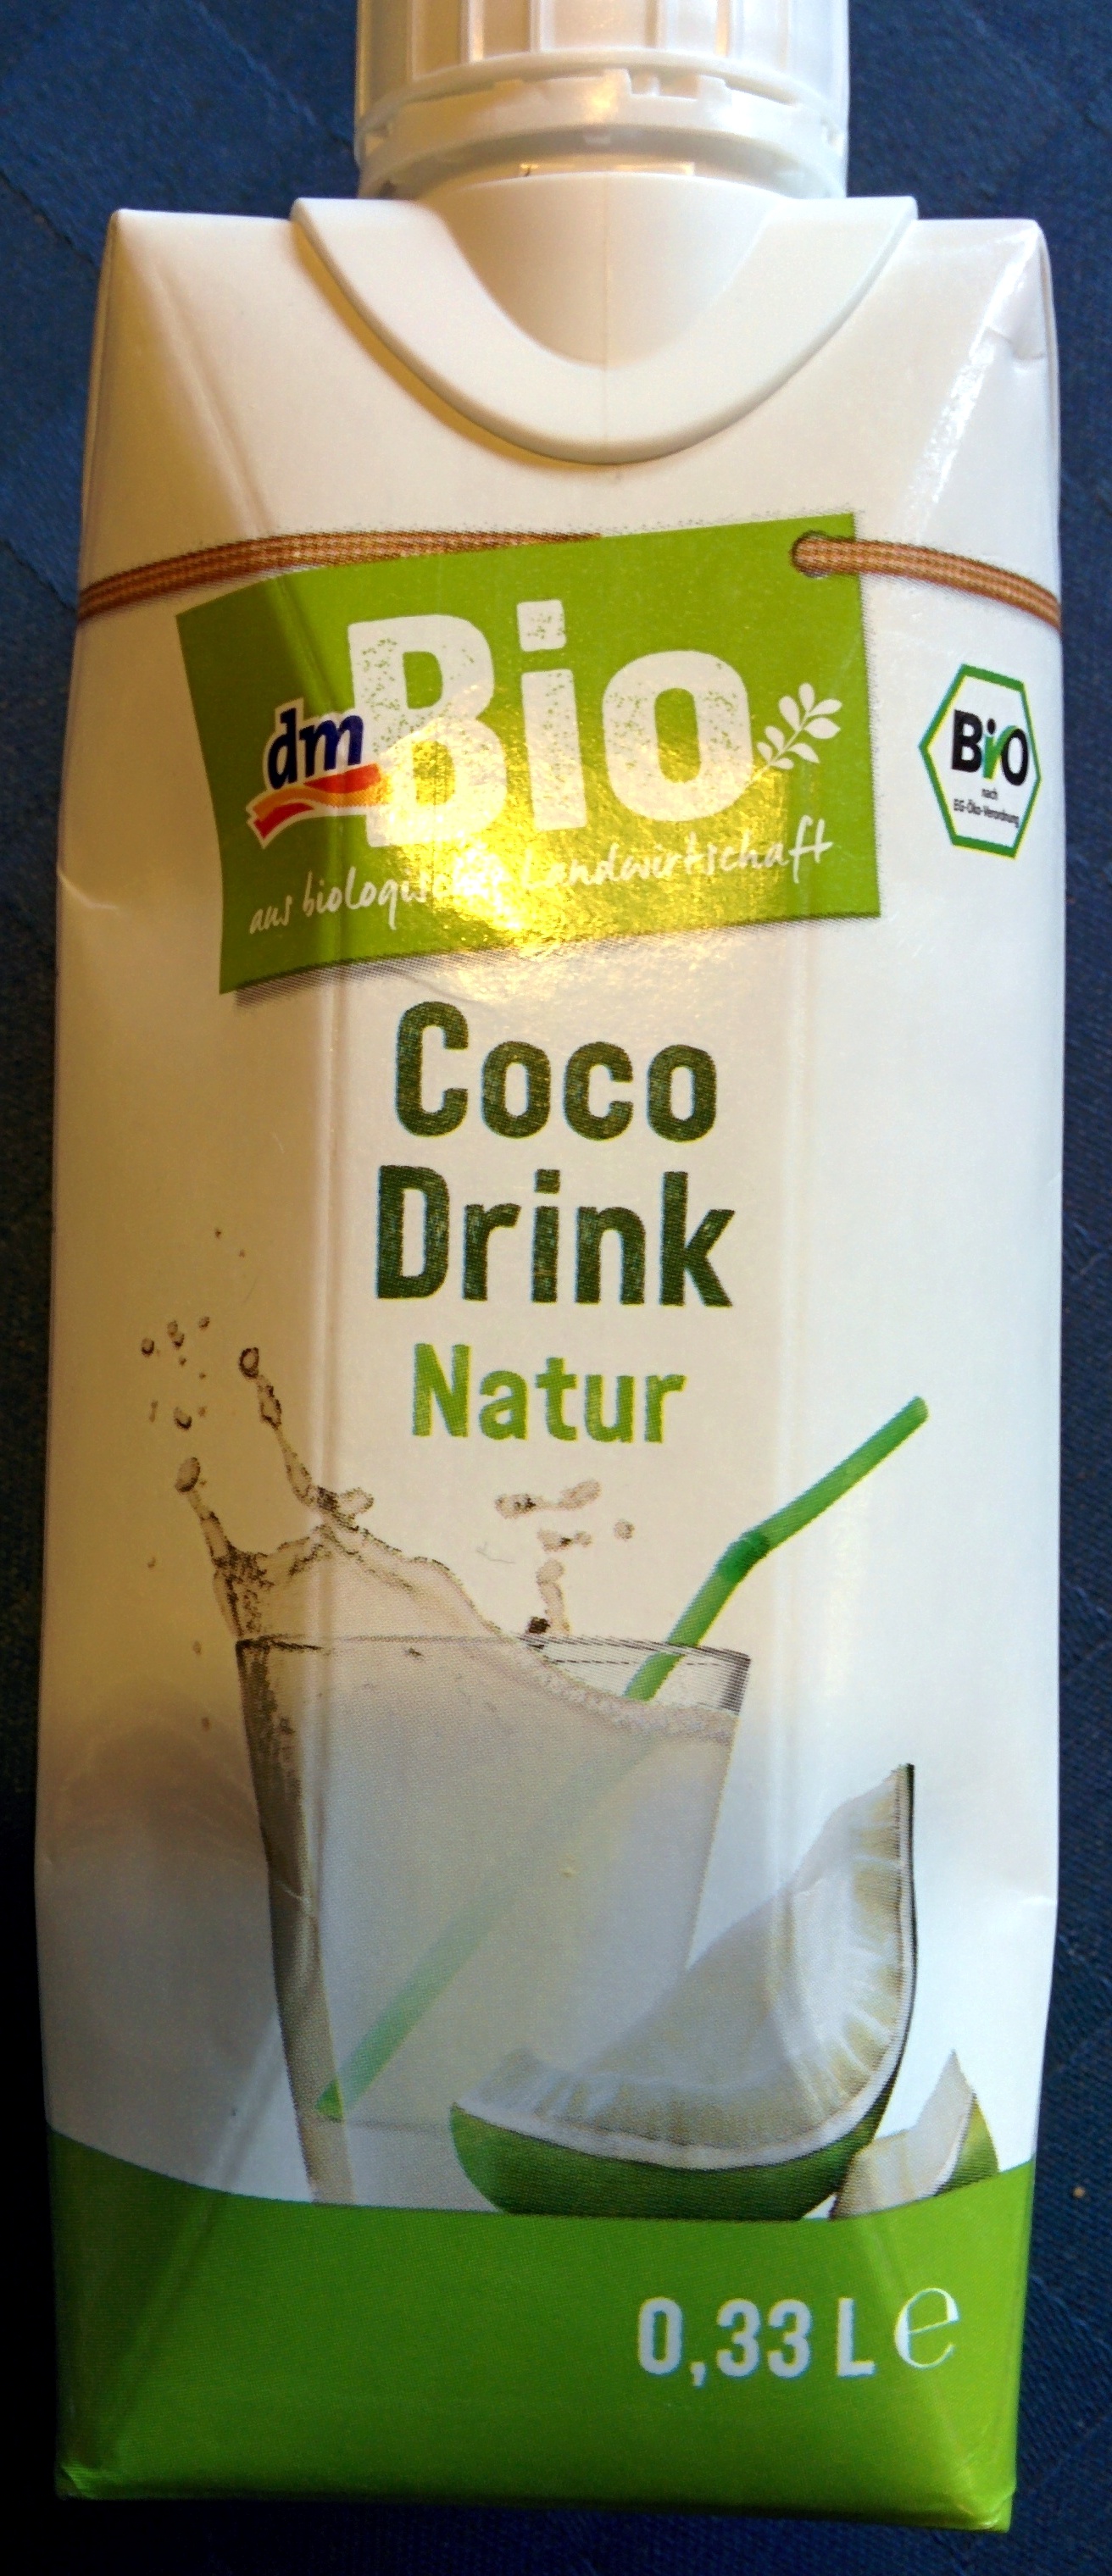 Coco Drink Natur - Produkt